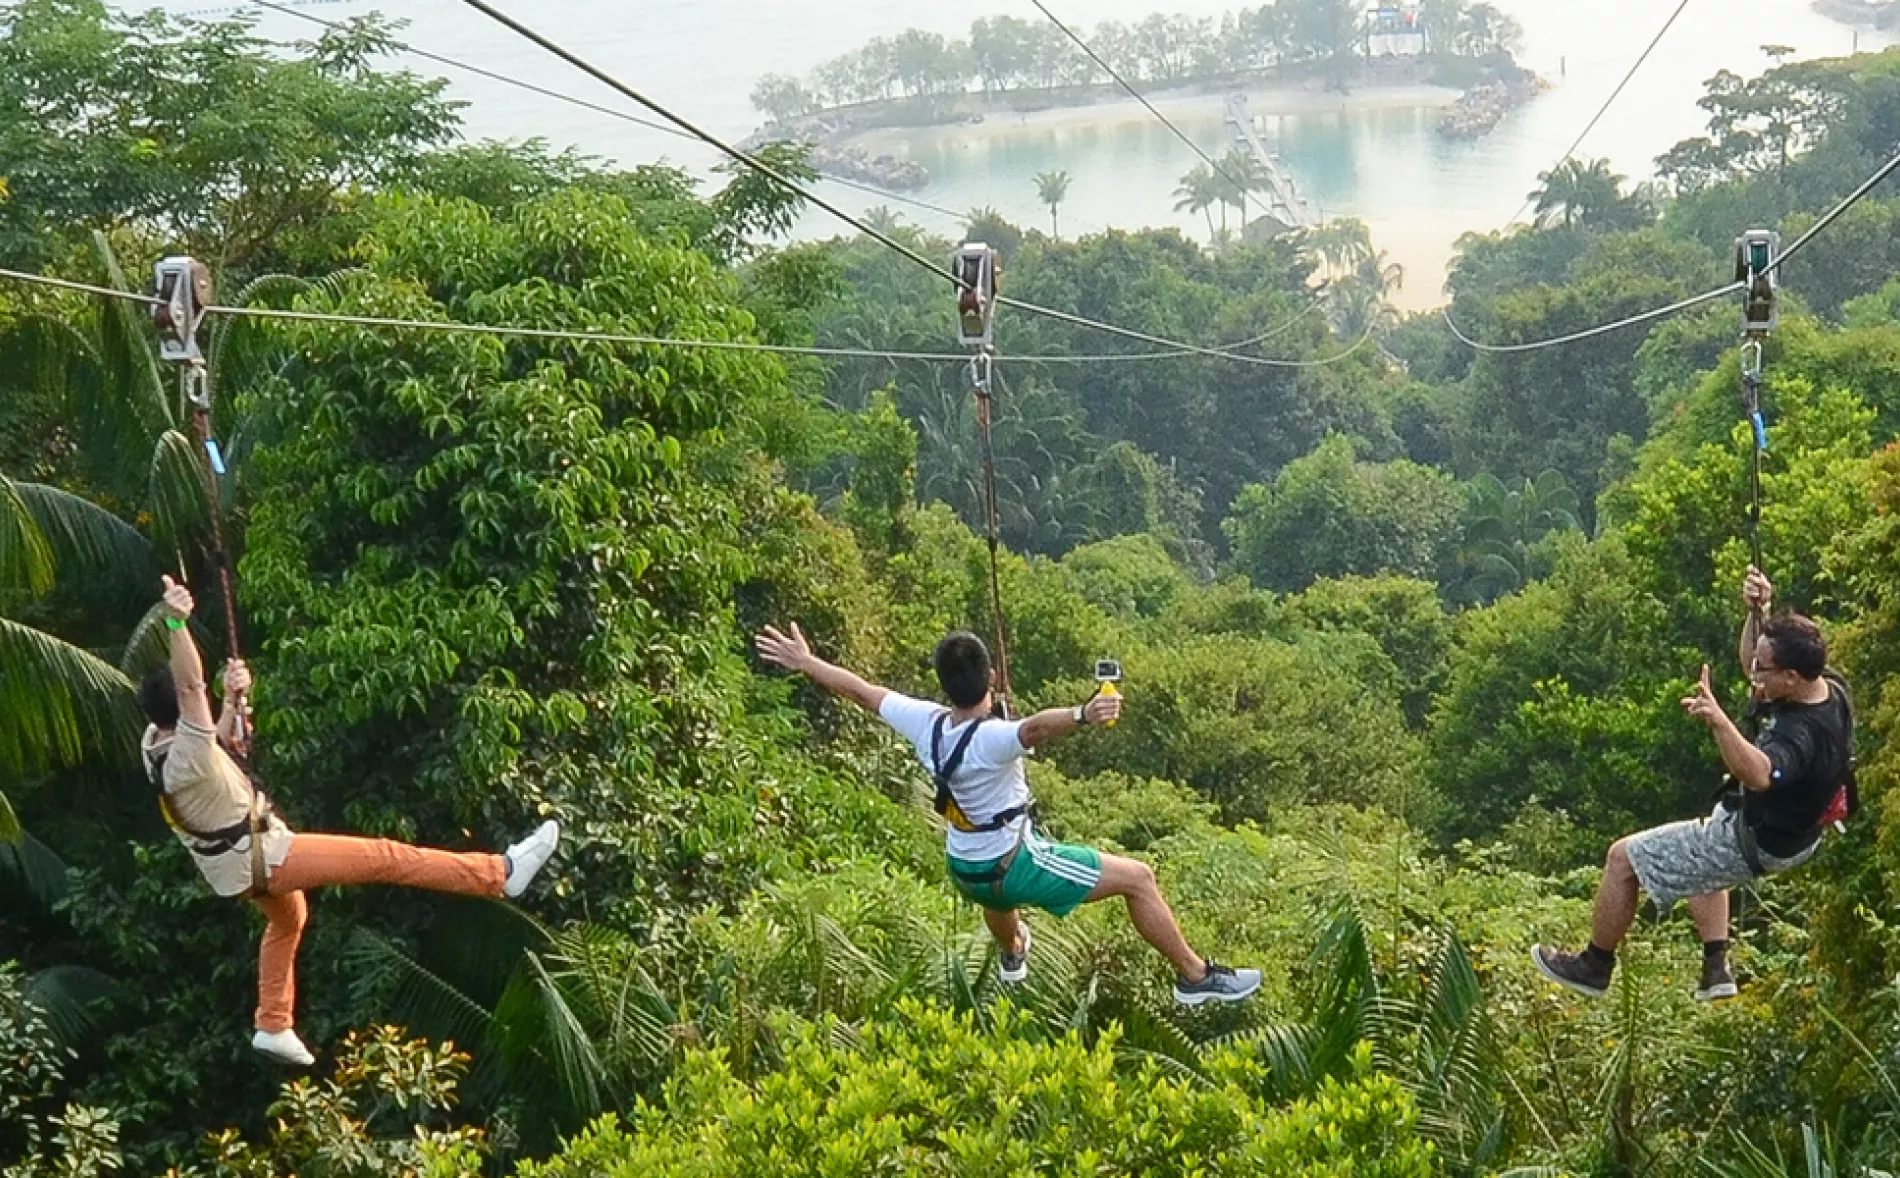 MegaZip Adventure Park in Singapore, Central Asia | Zip Lines,Adventure Parks - Rated 3.8